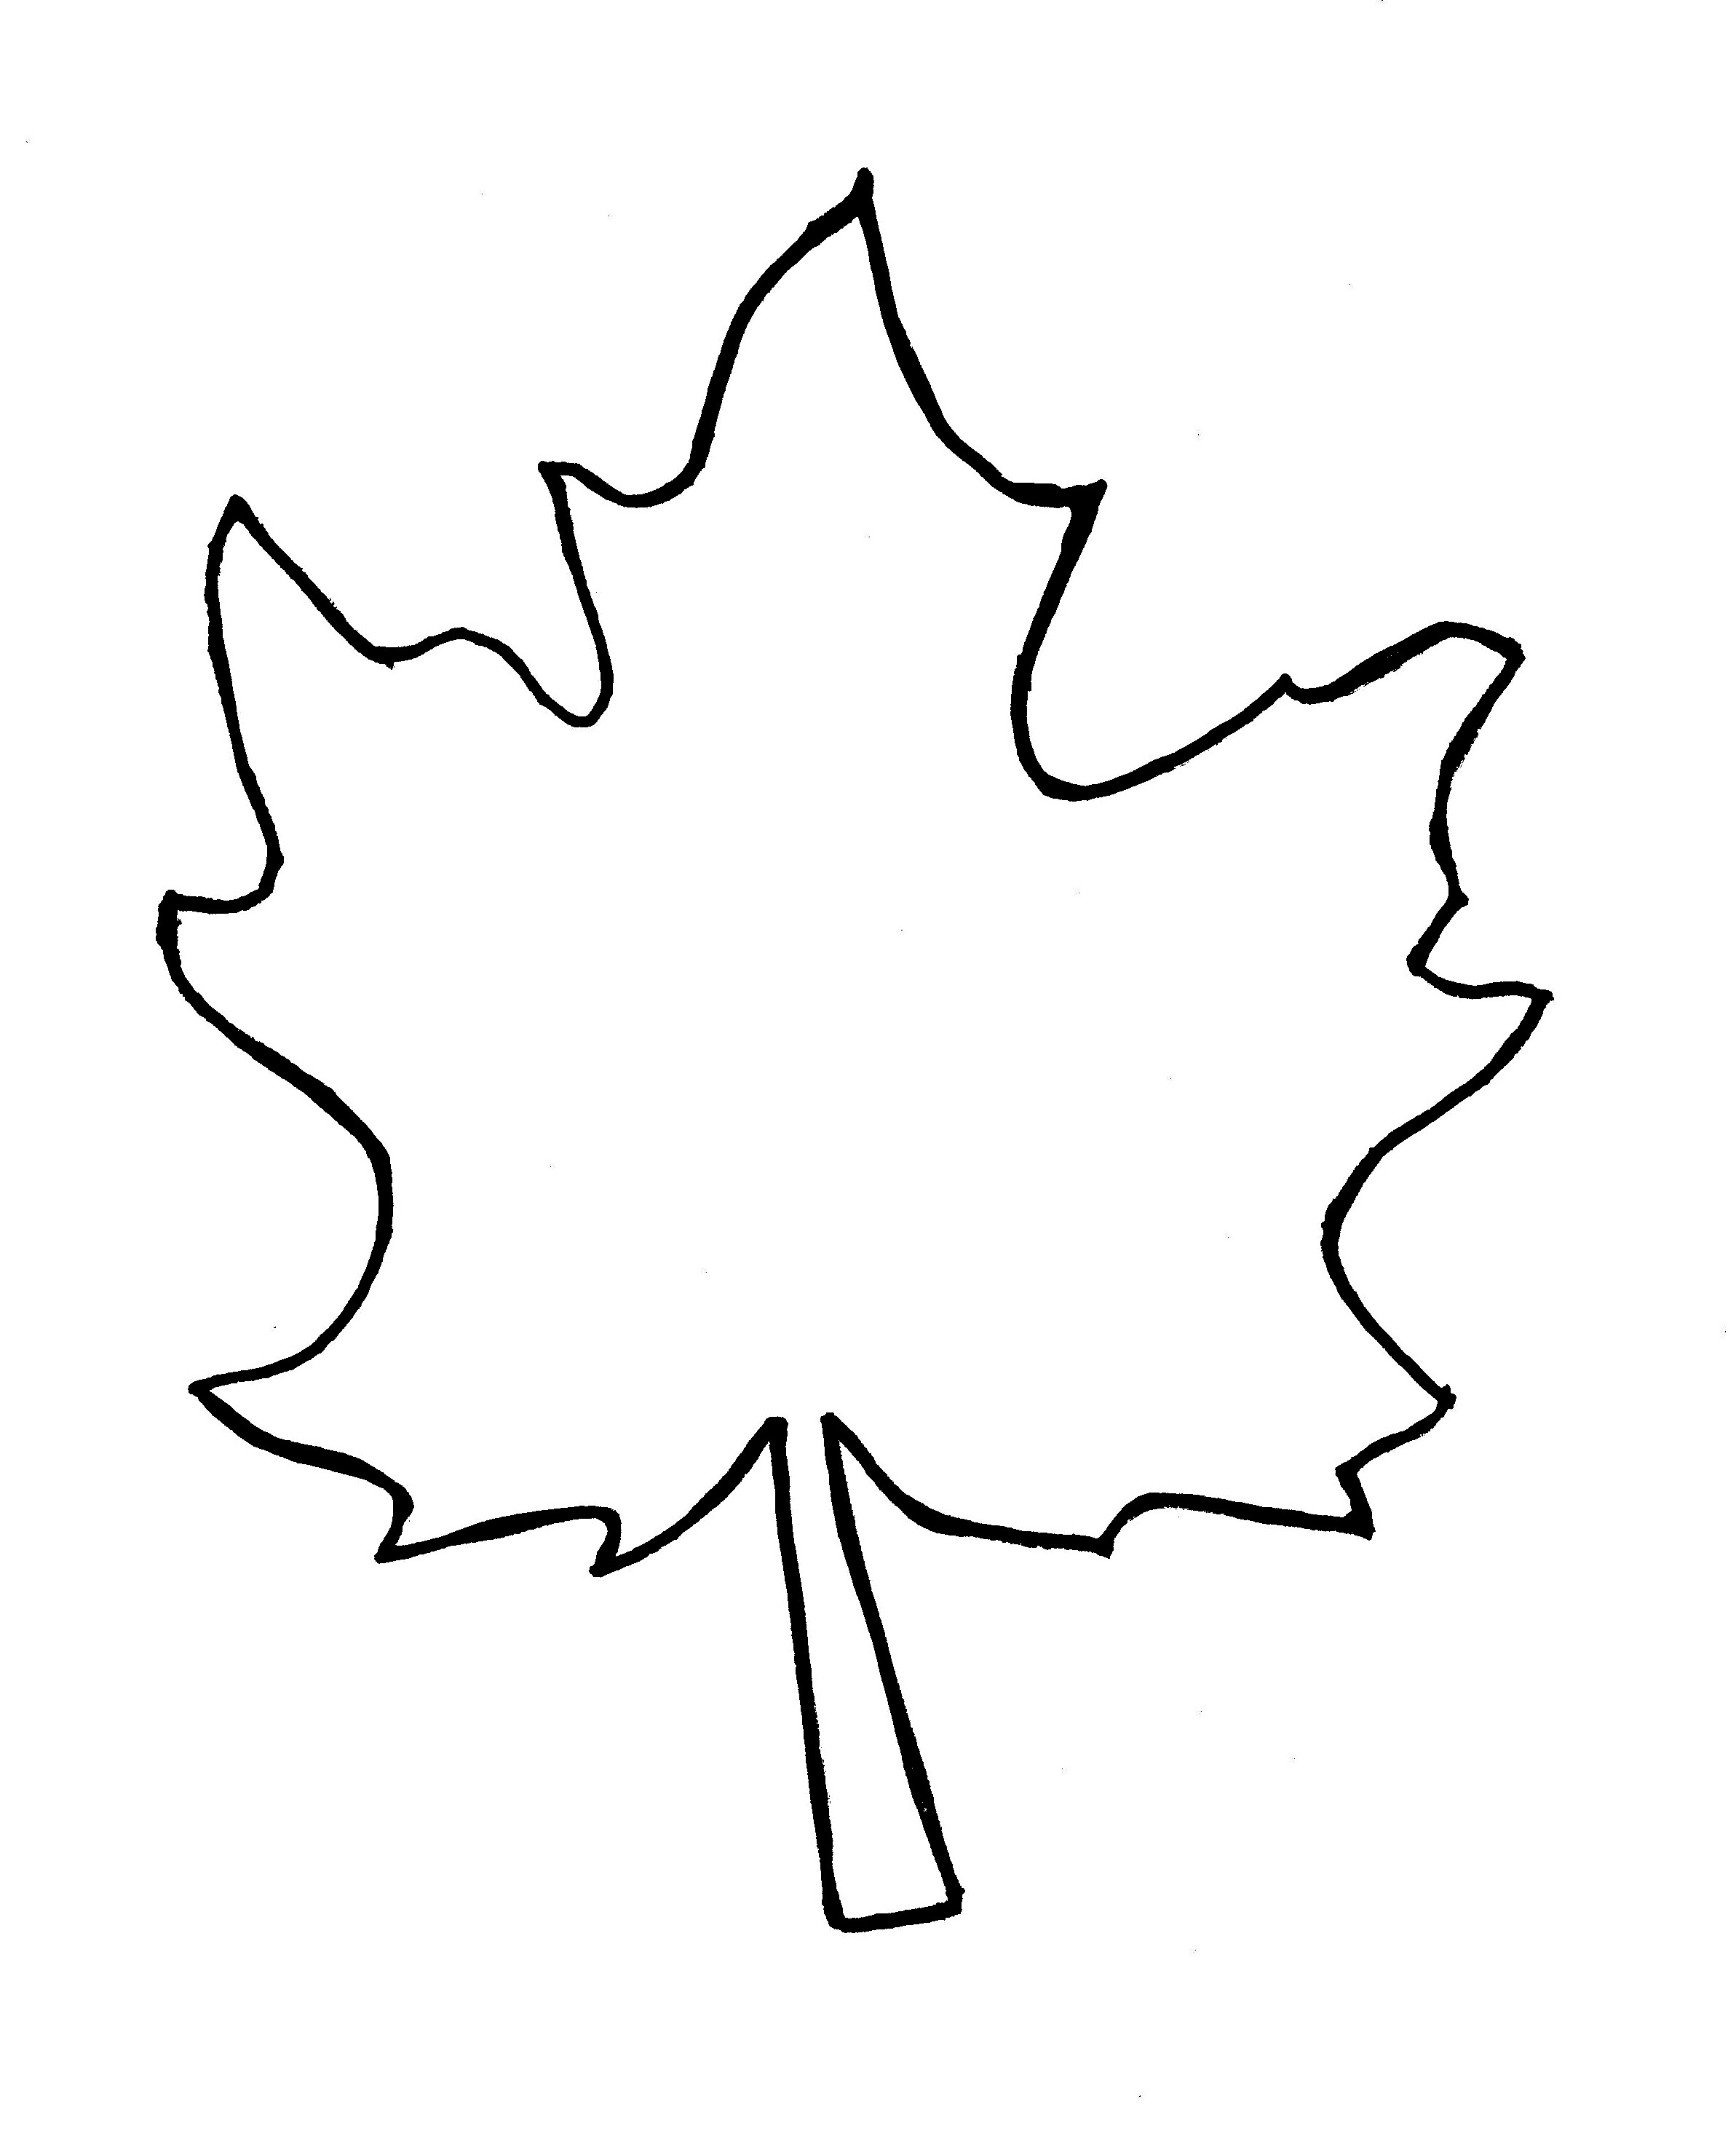 Free Jungle Leaf Template, Download Free Clip Art, Free Clip Art On - Free Printable Leaves